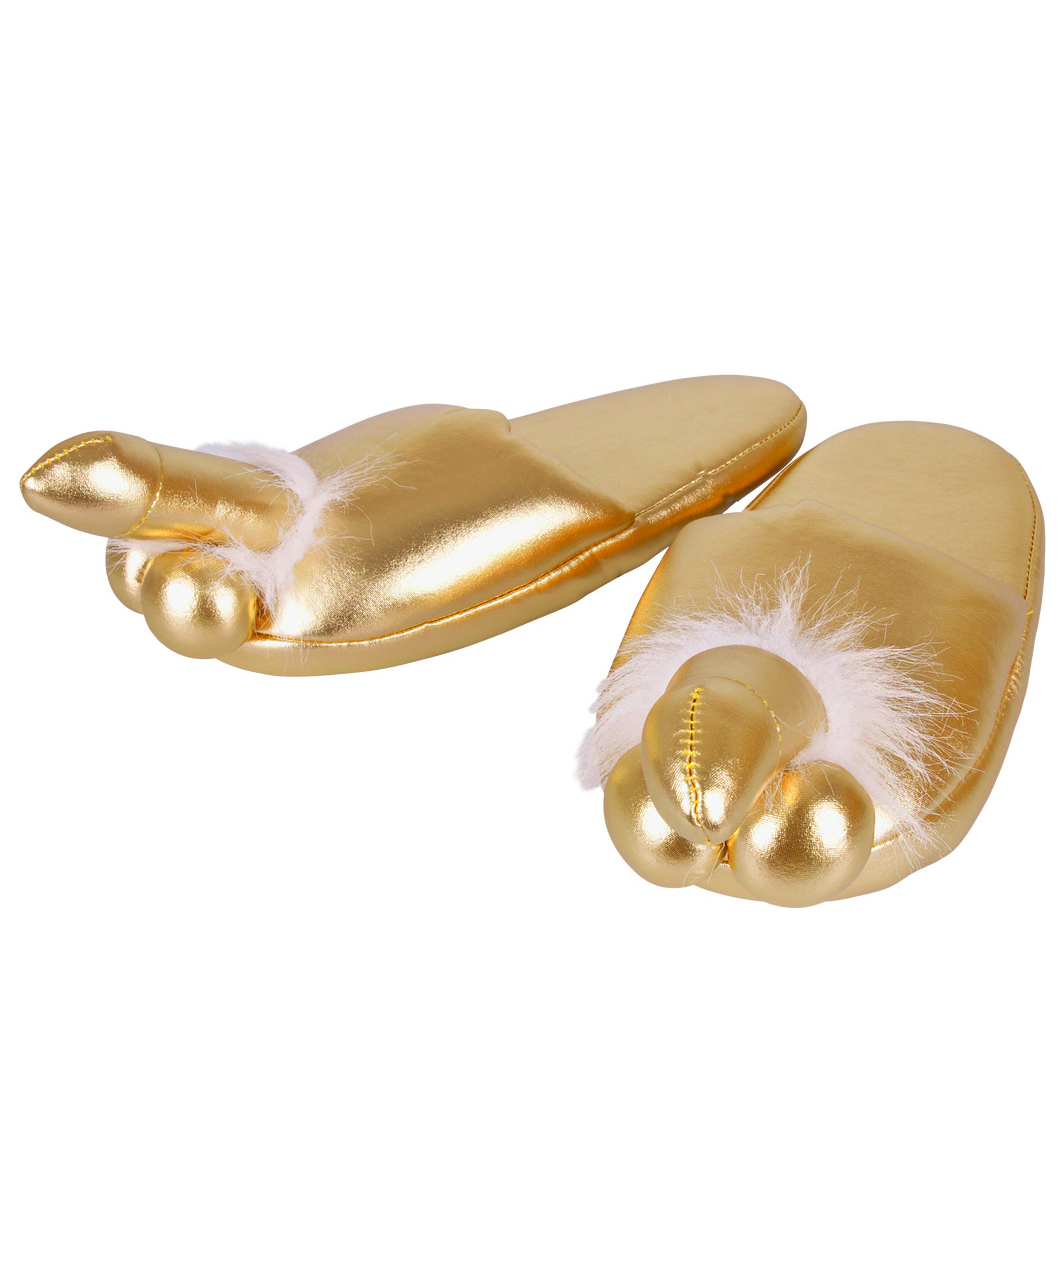 OV gold-coloured penis slippers